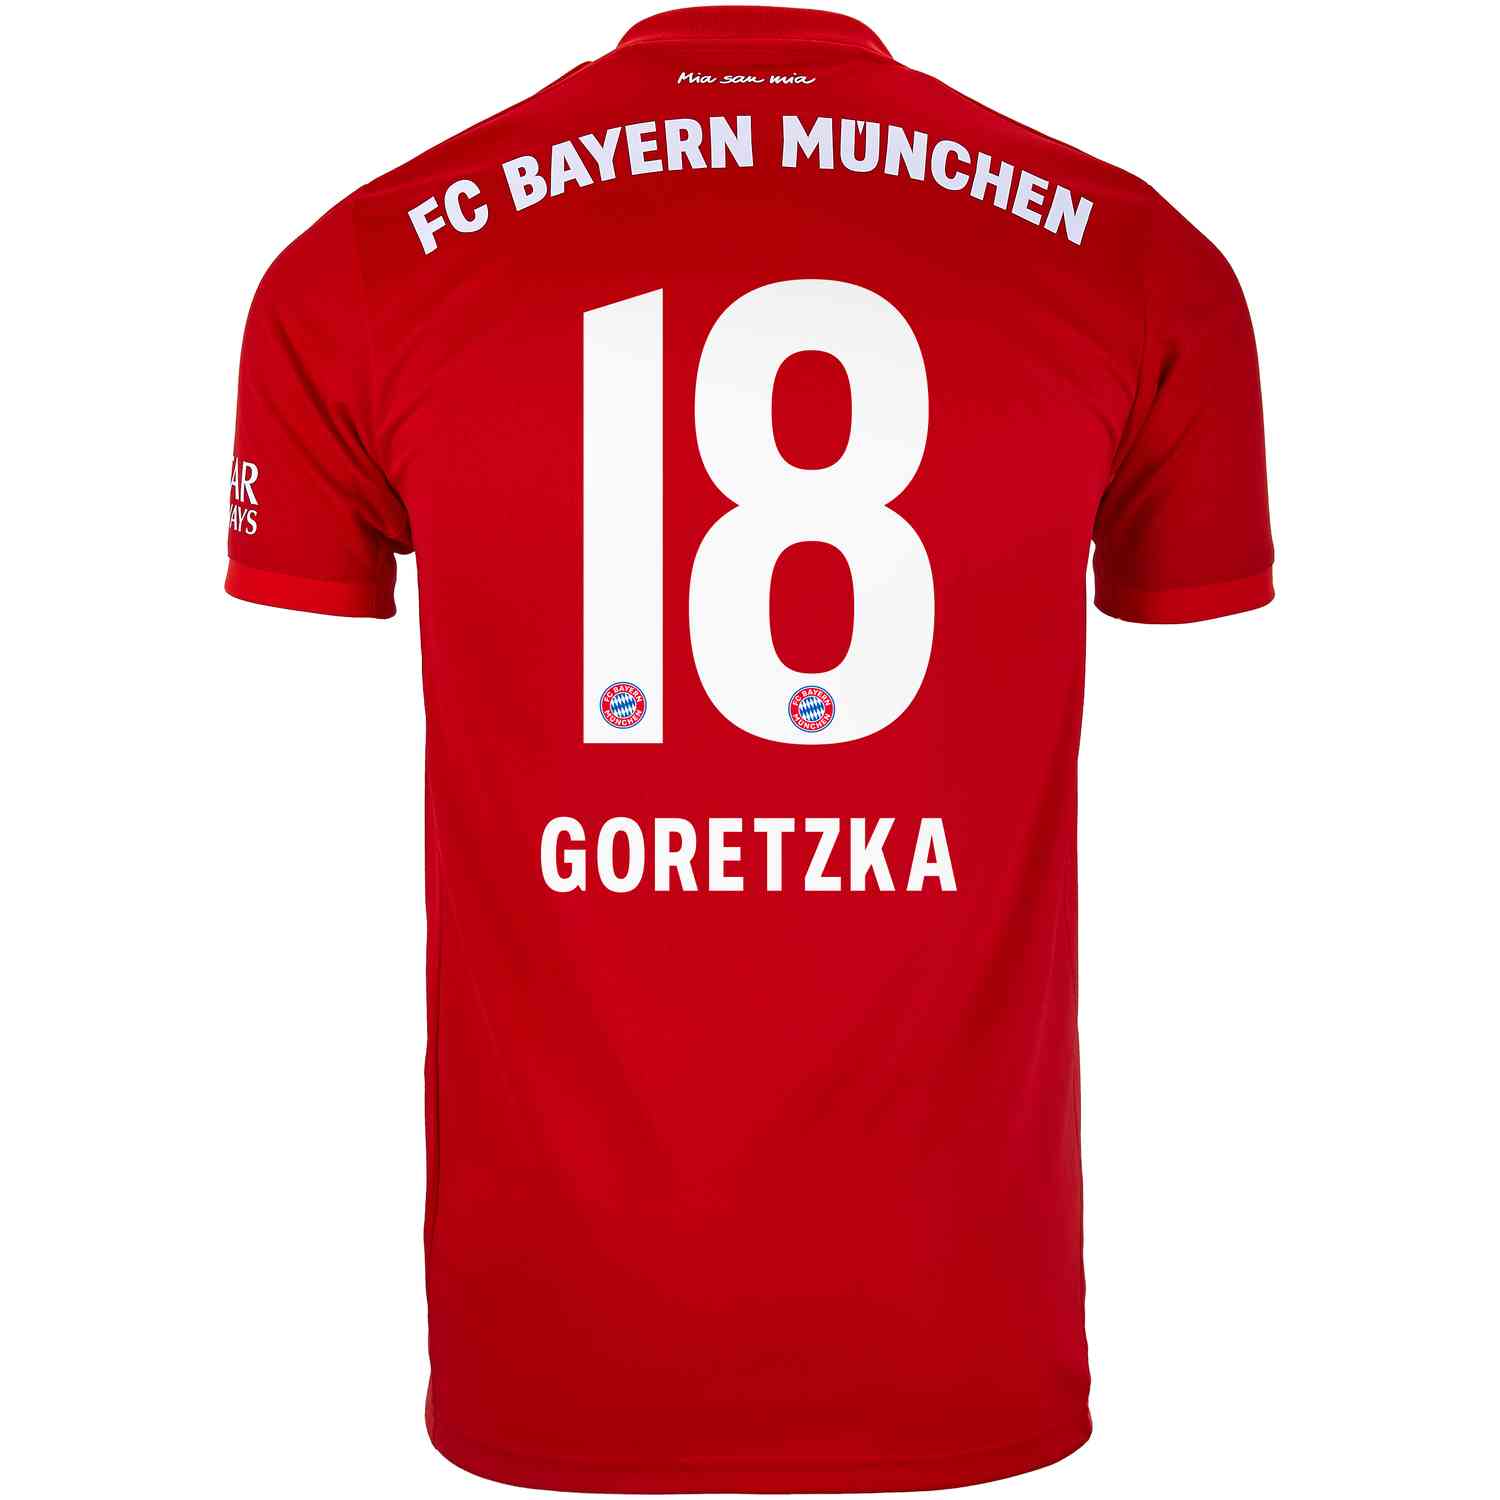 leon goretzka jersey number